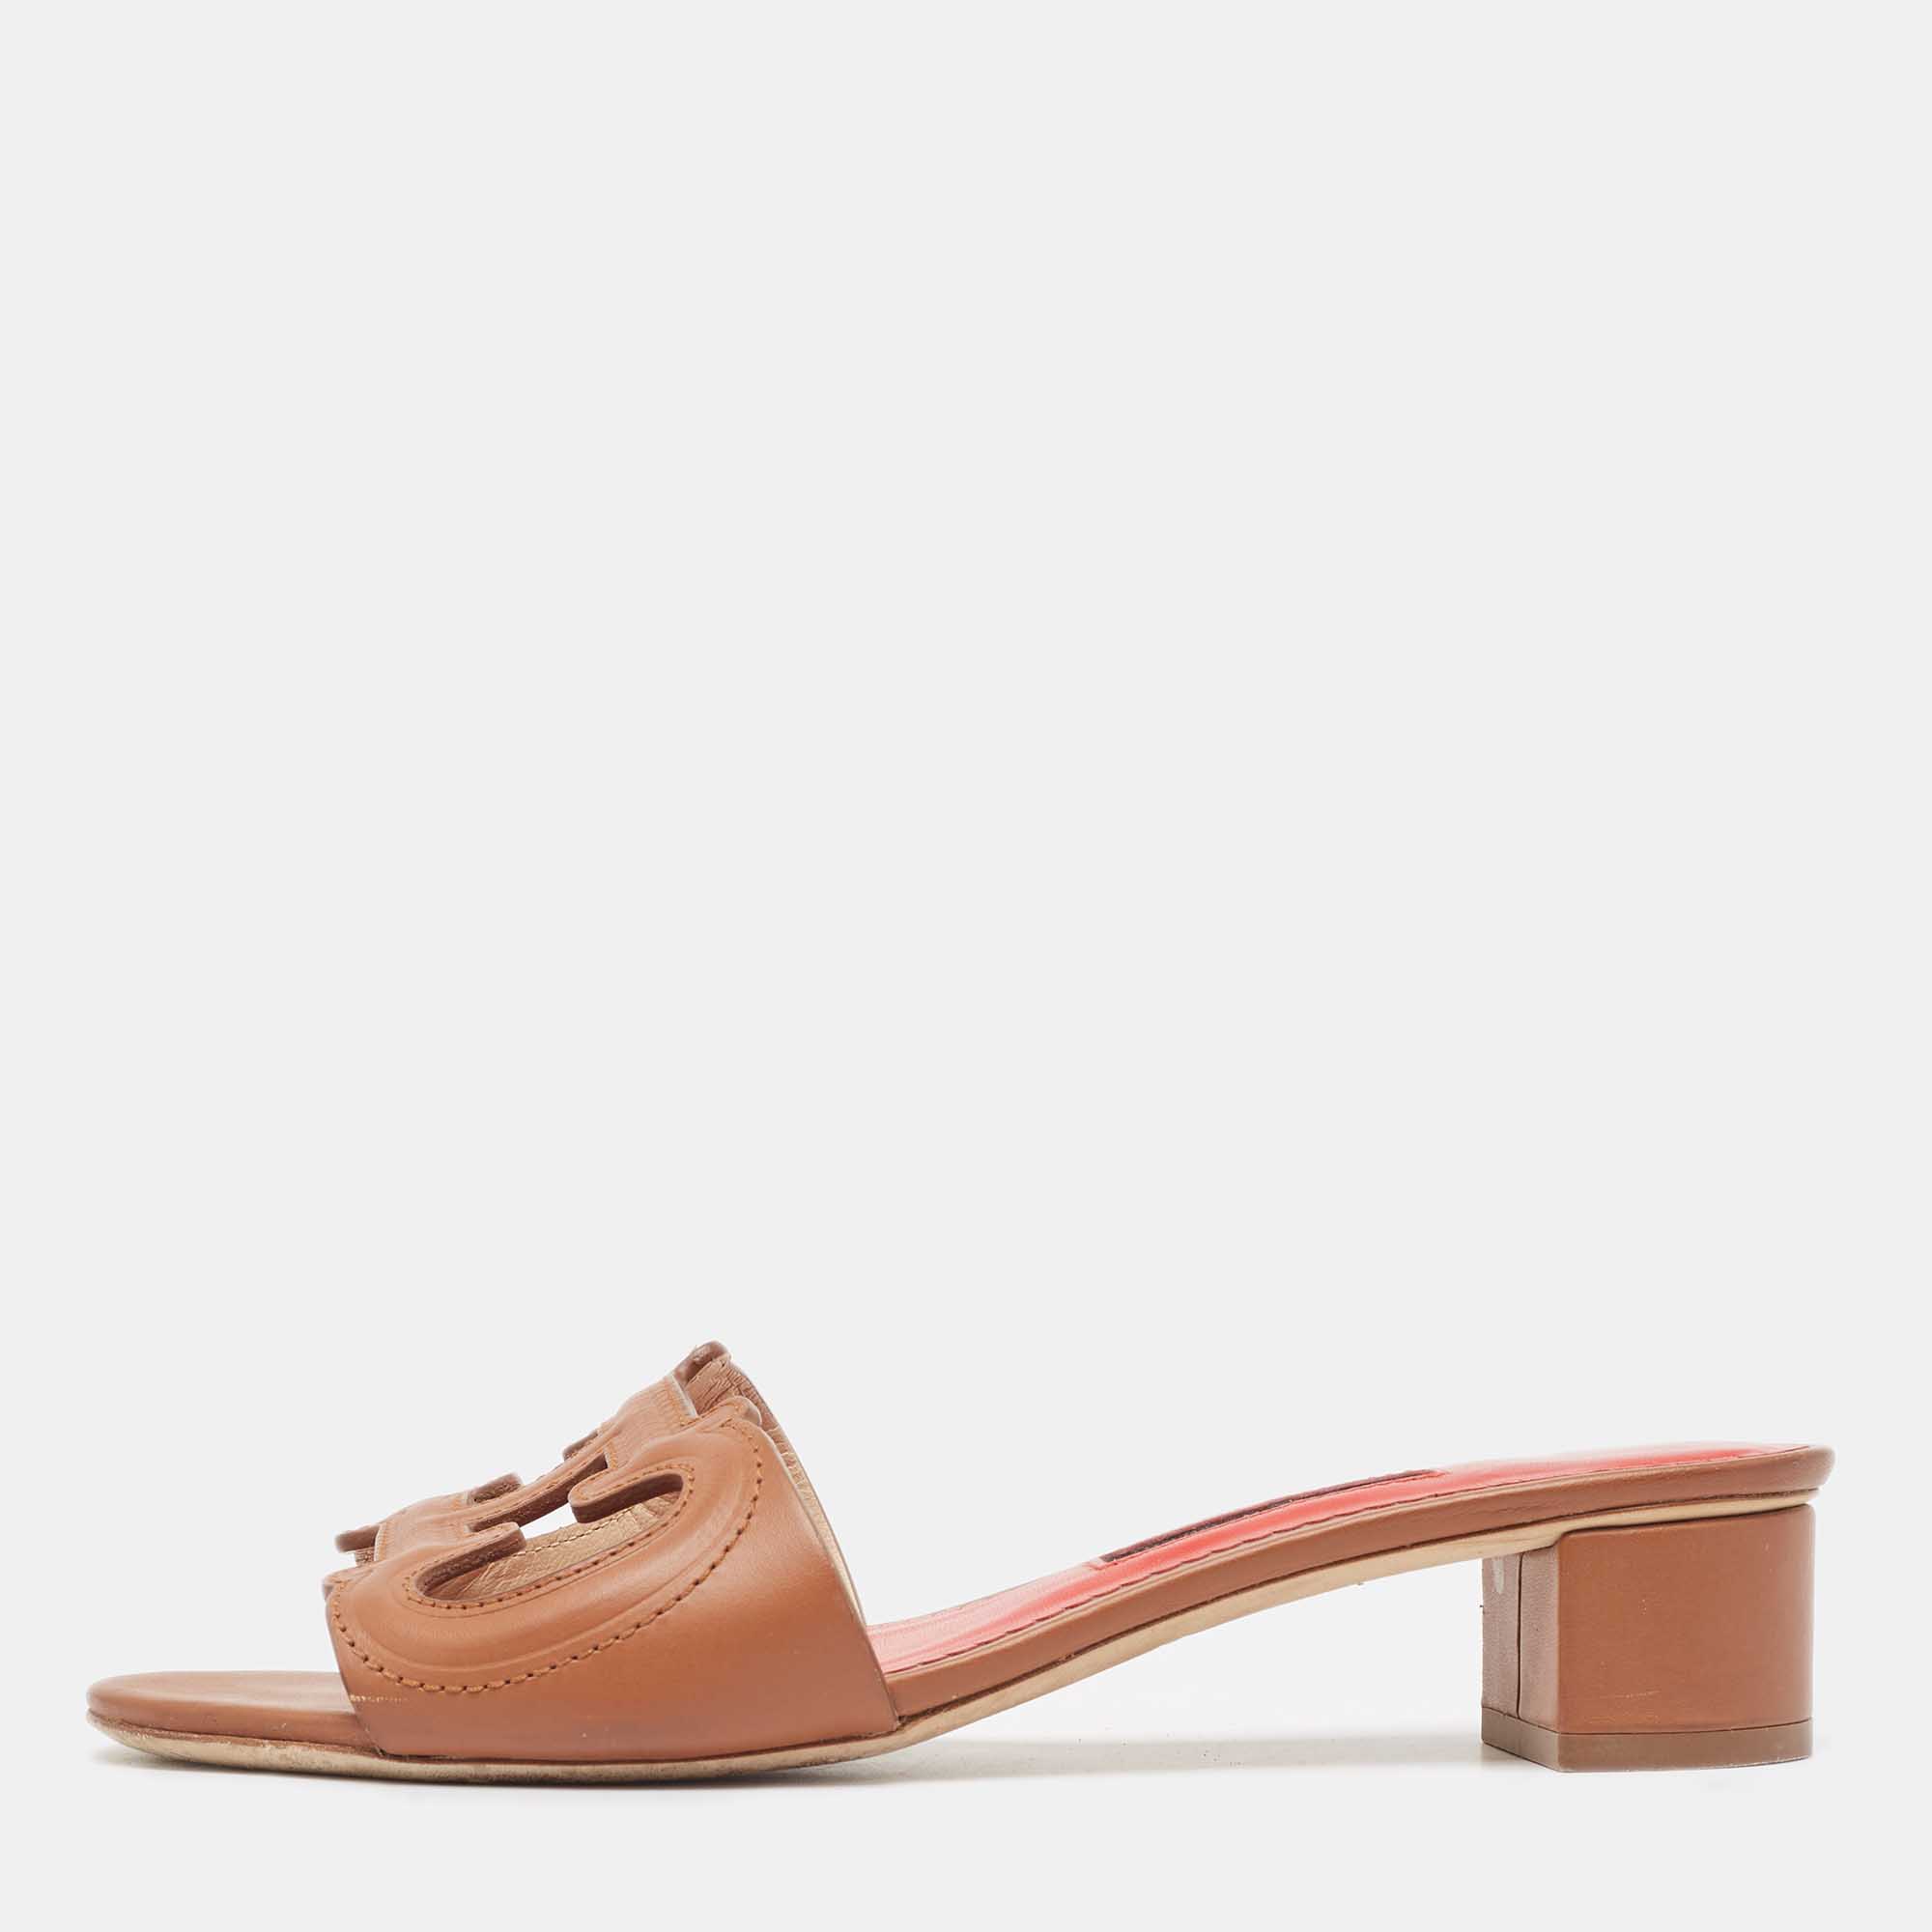 Carolina herrera brown leather slide sandals size 37